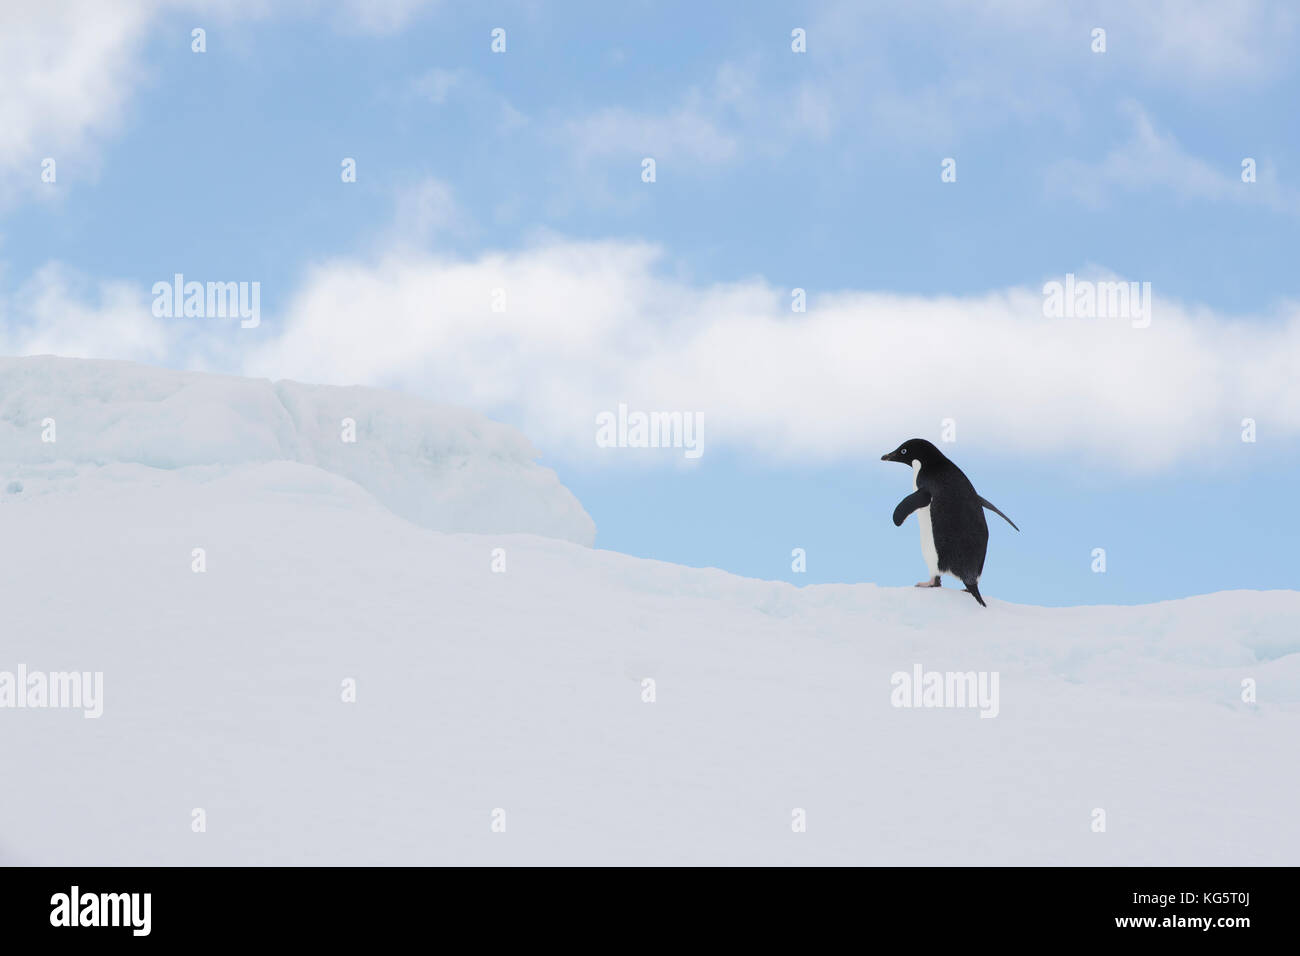 Adelie Penguin Passeggiate sul ghiaccio, floe Antartide Foto Stock